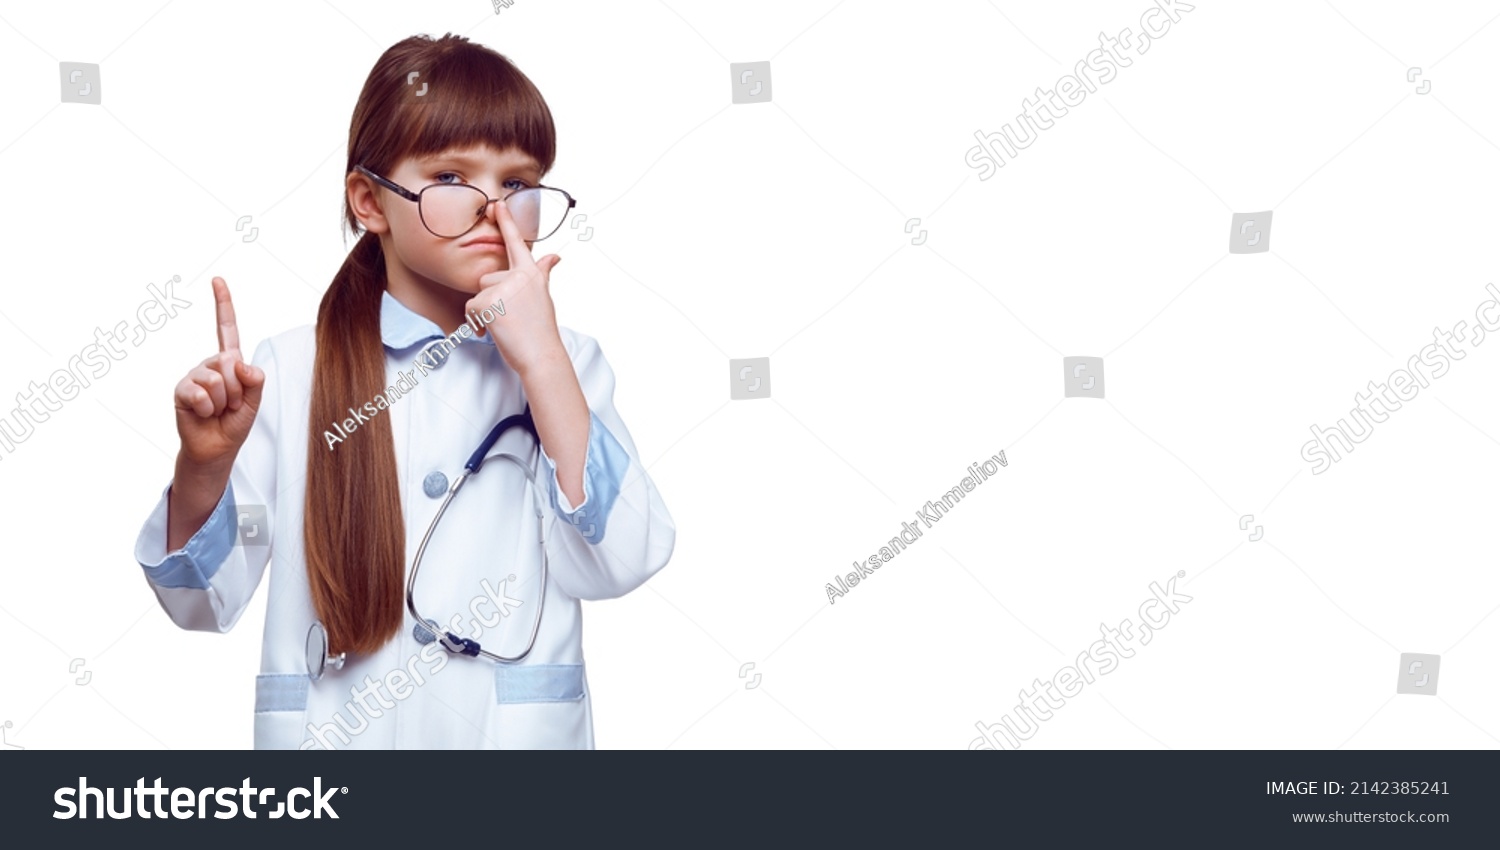 4,097 Cute boy stethoscope on white background Images, Stock Photos ...